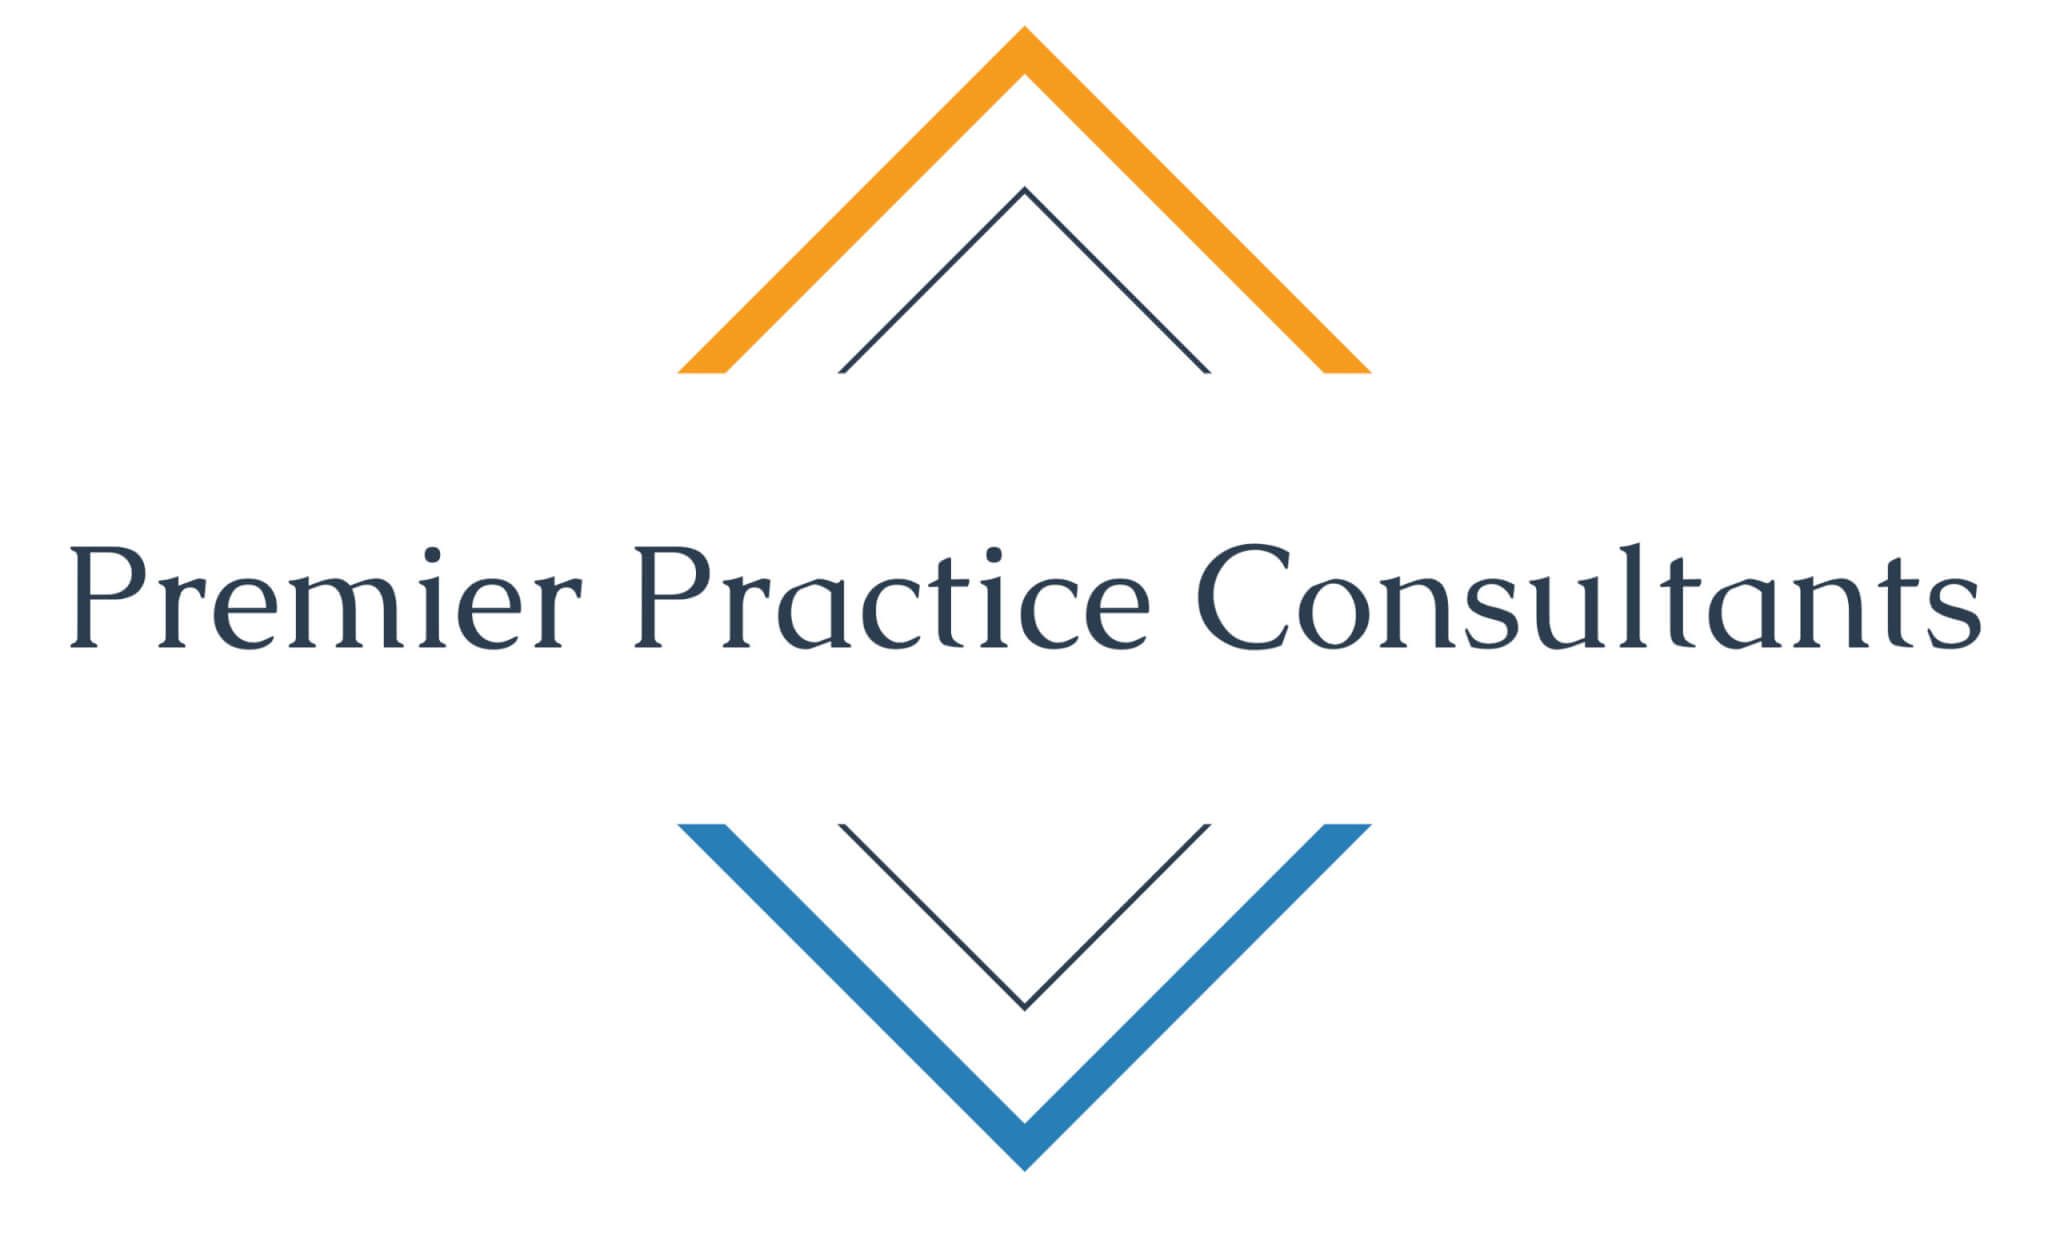 Premier Practice Consultants